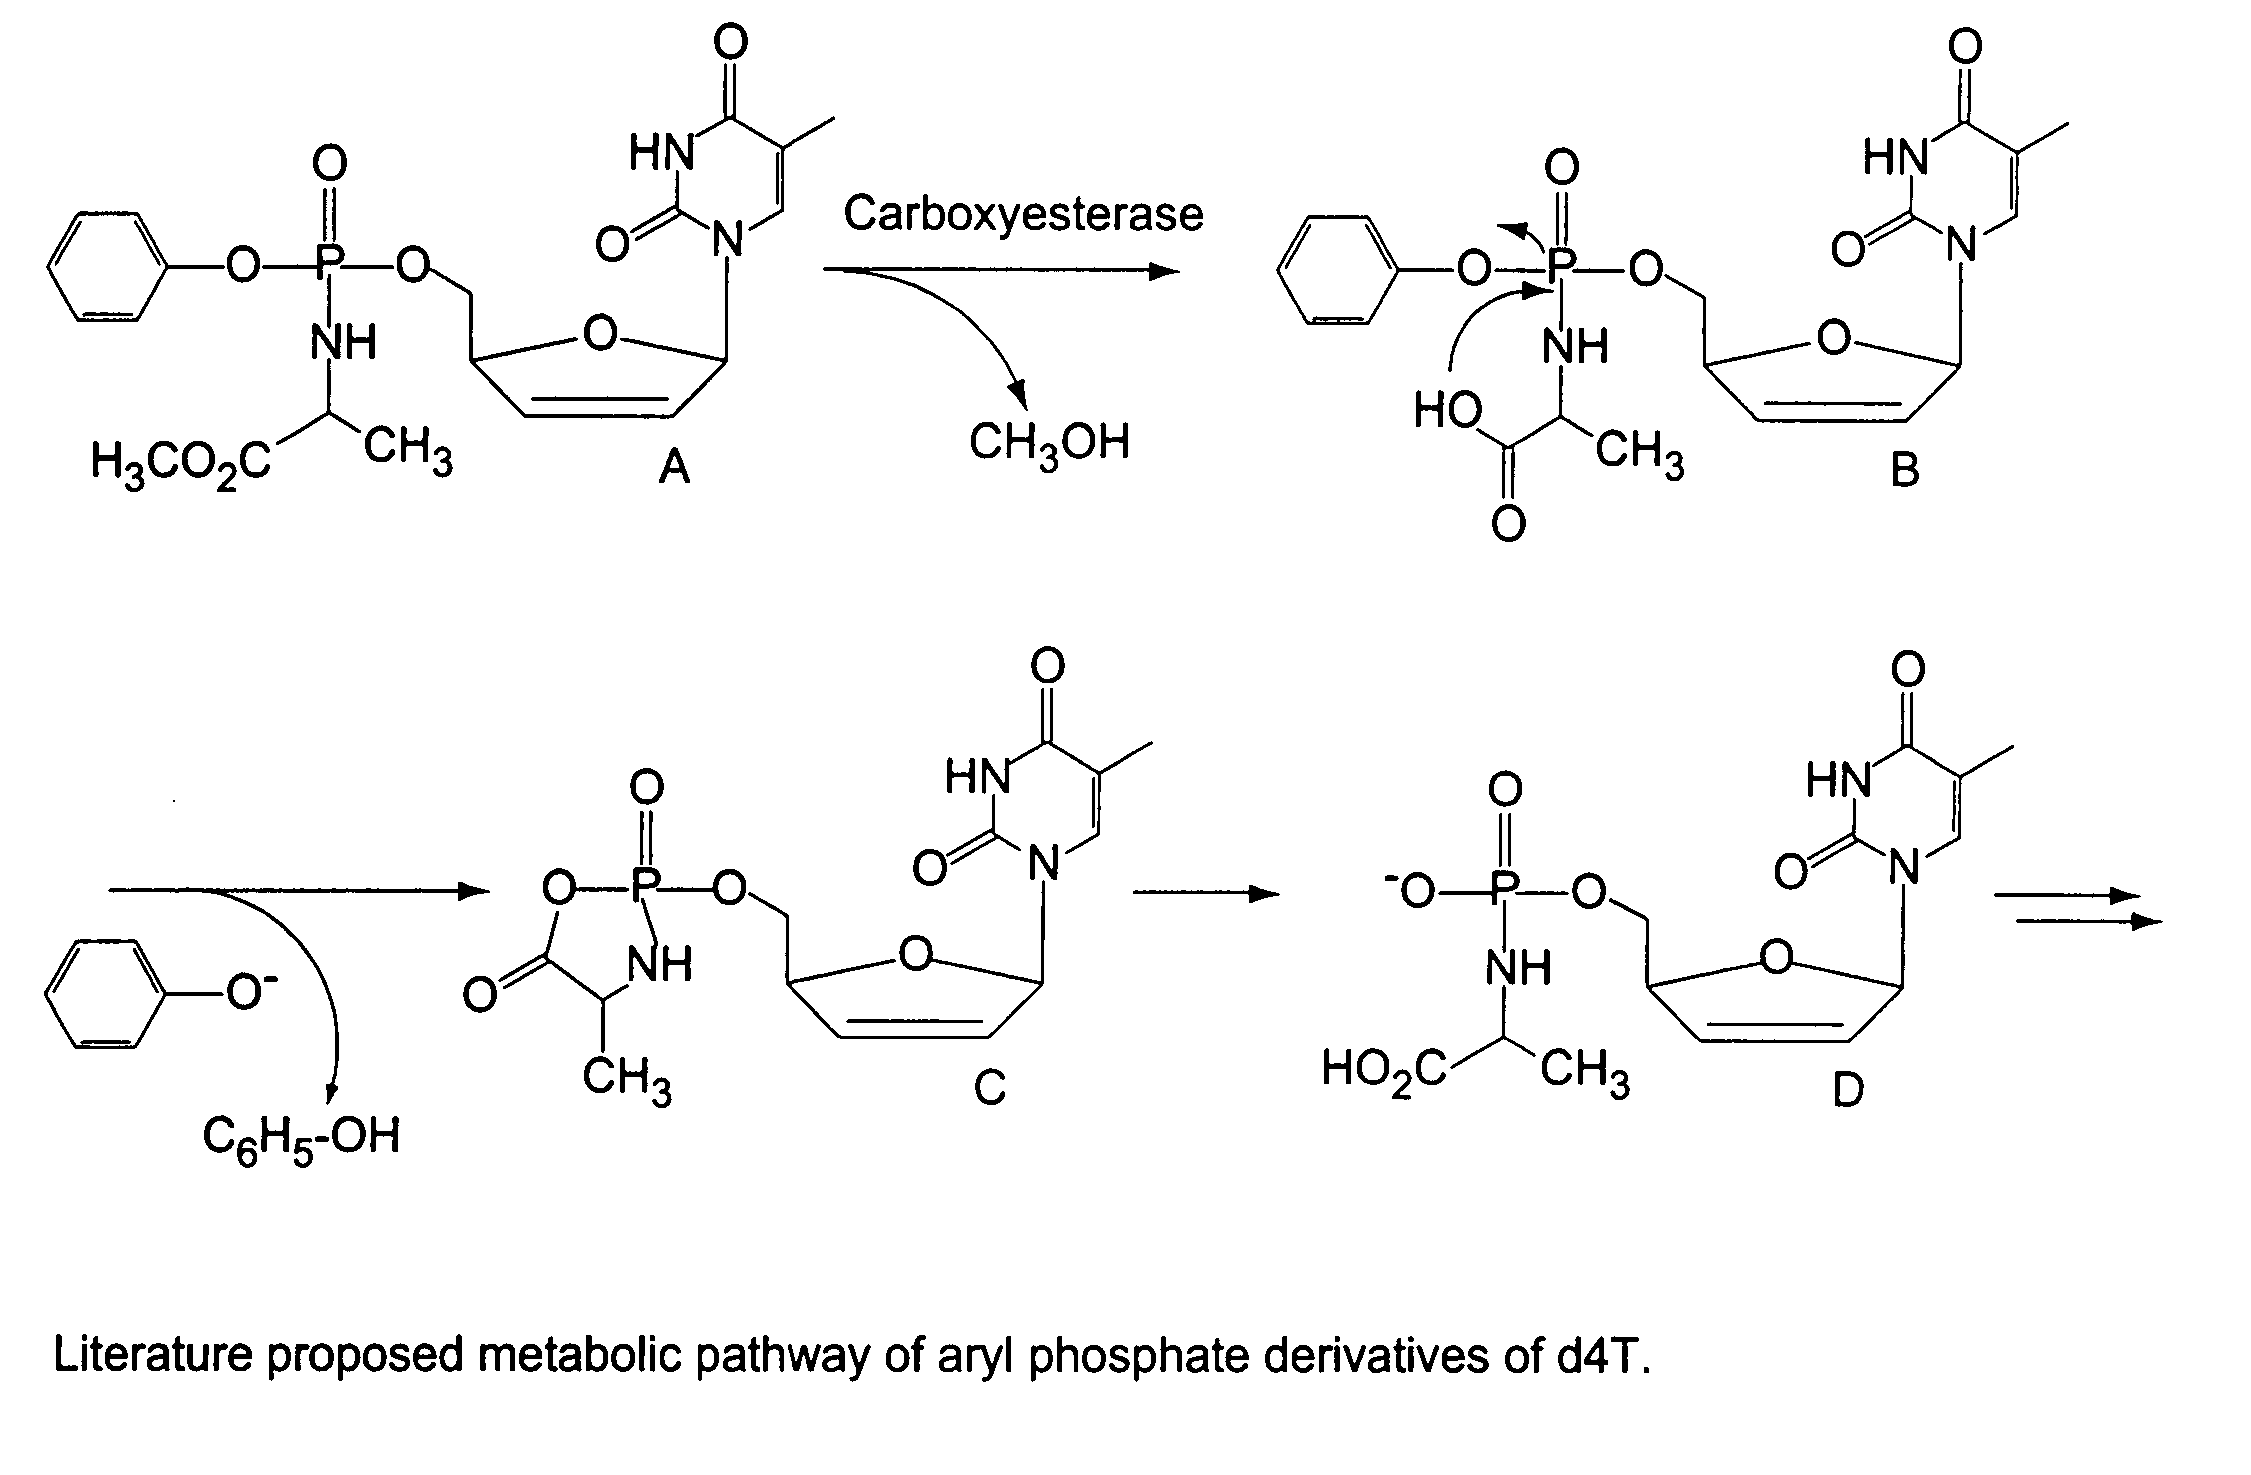 Aryl phosphate derivatives of AZT having anti-HIV activity